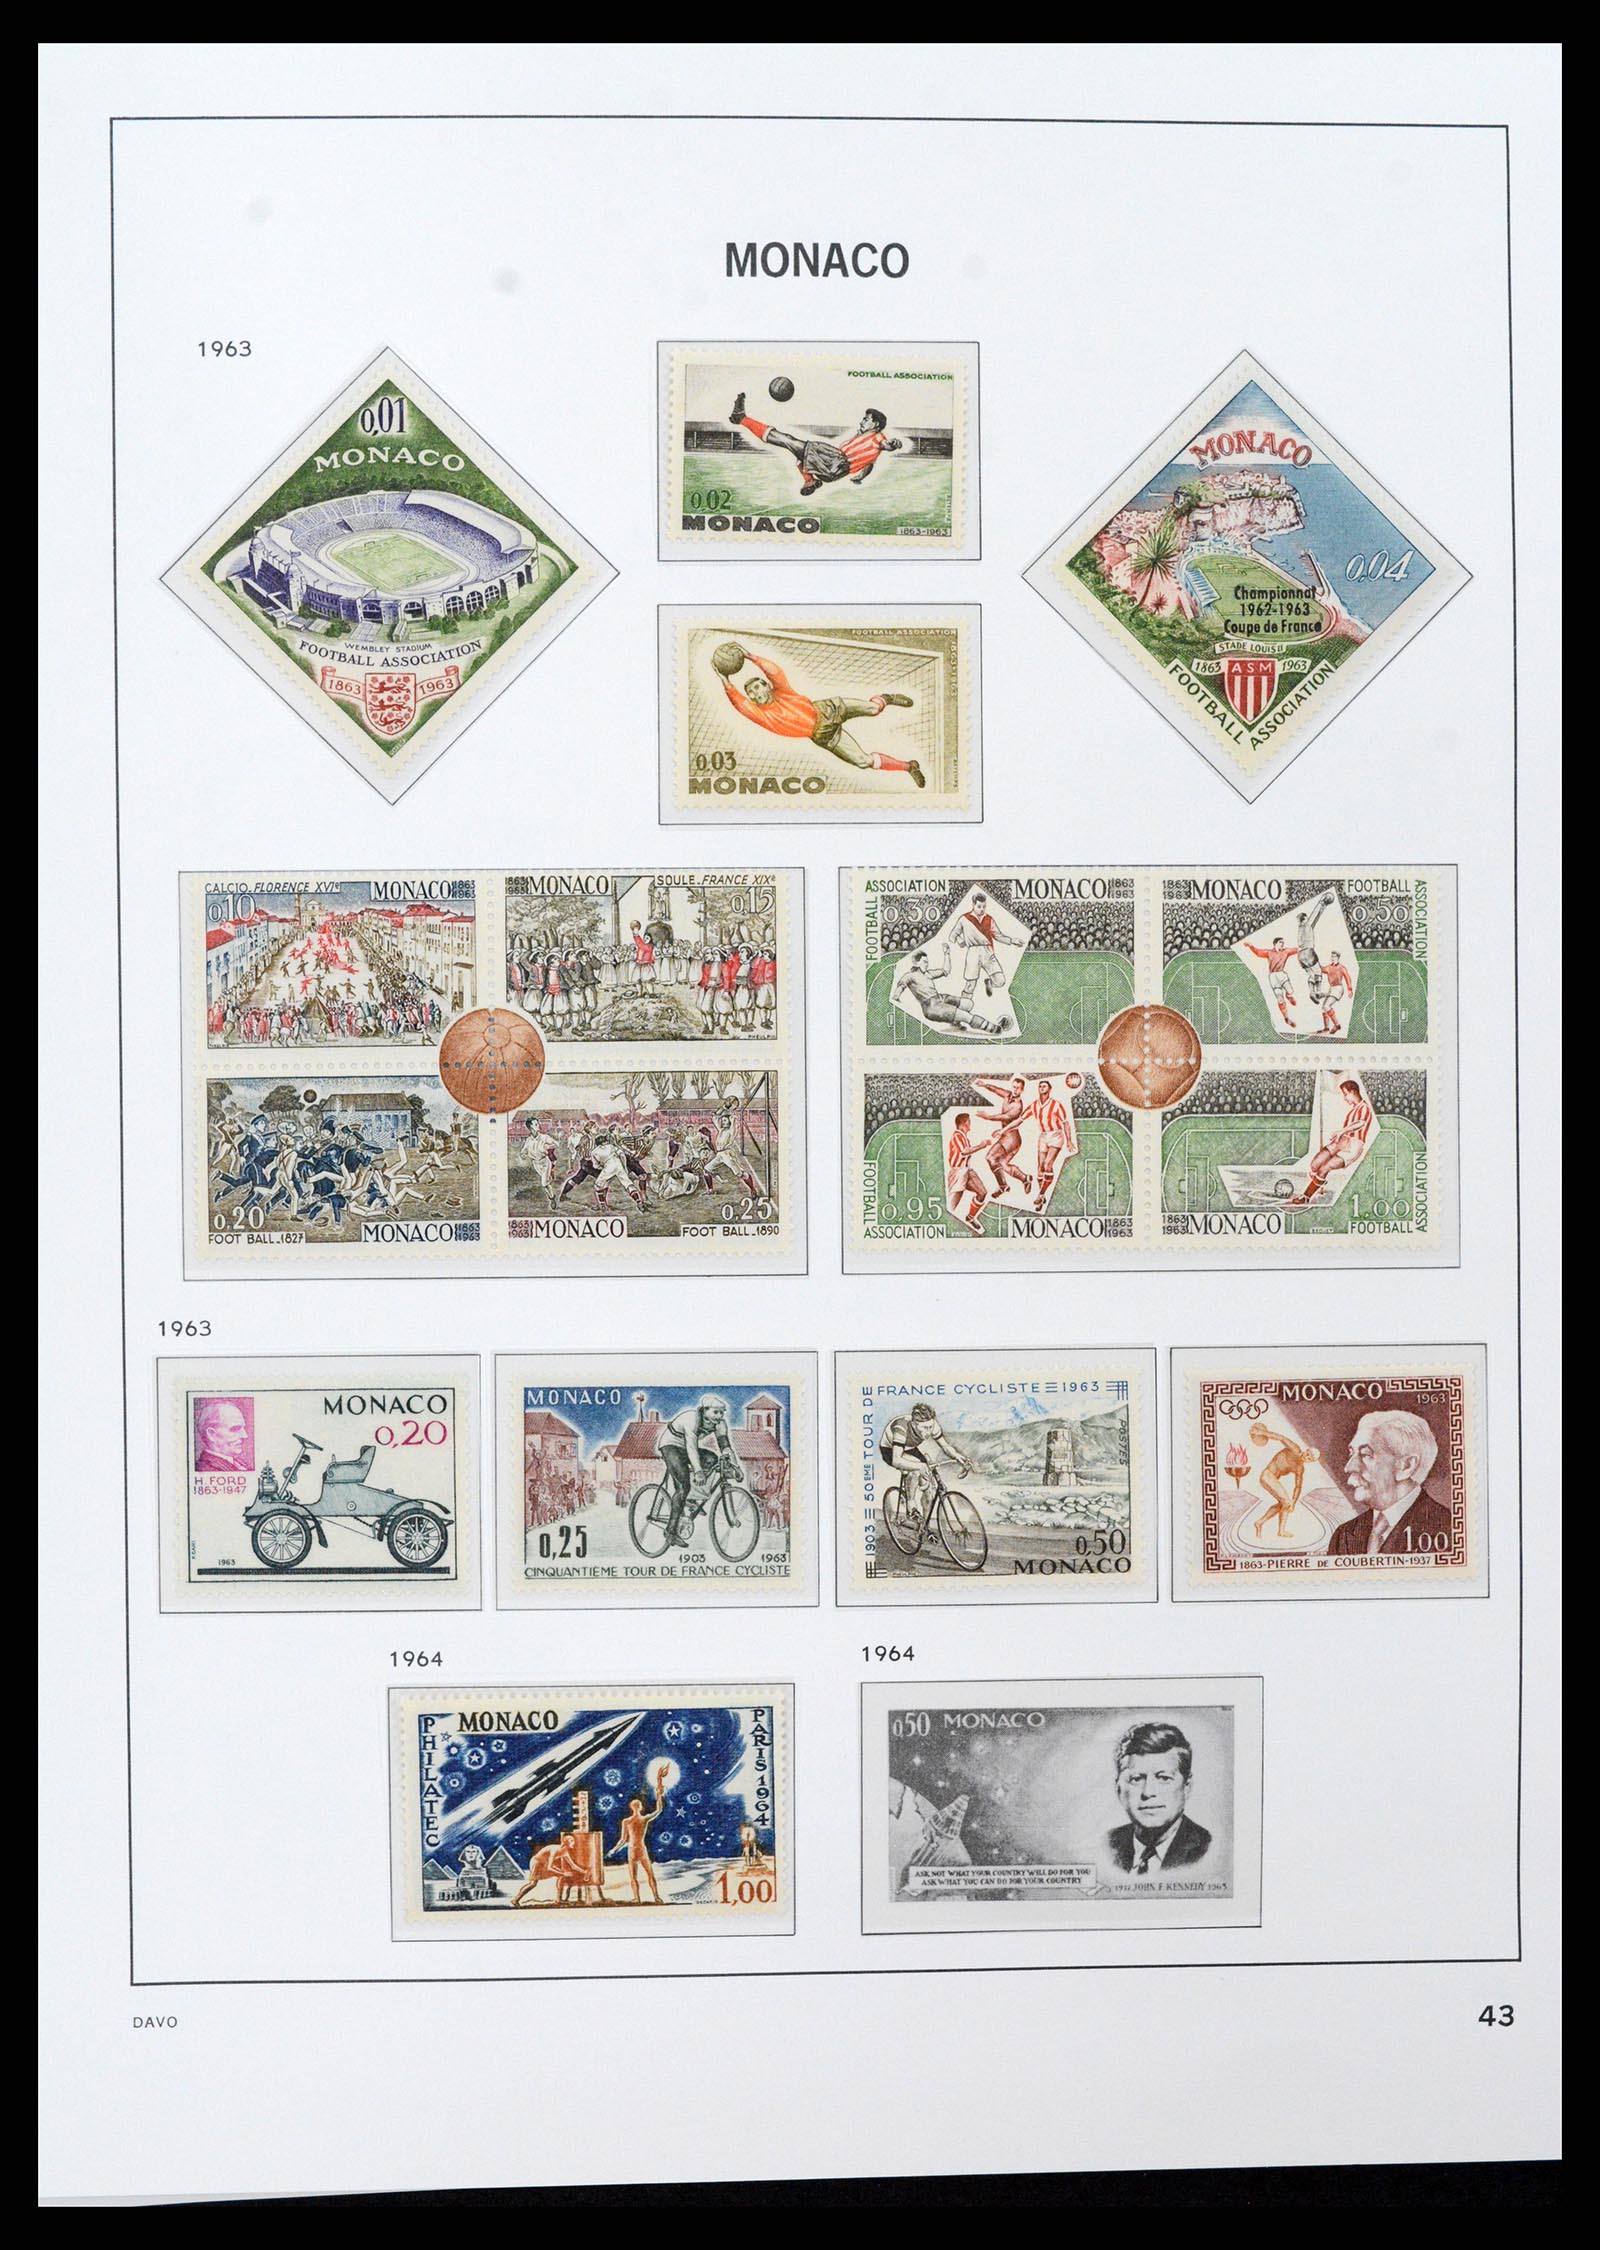 37279 043 - Stamp collection 37279 Monaco 1885-1969.